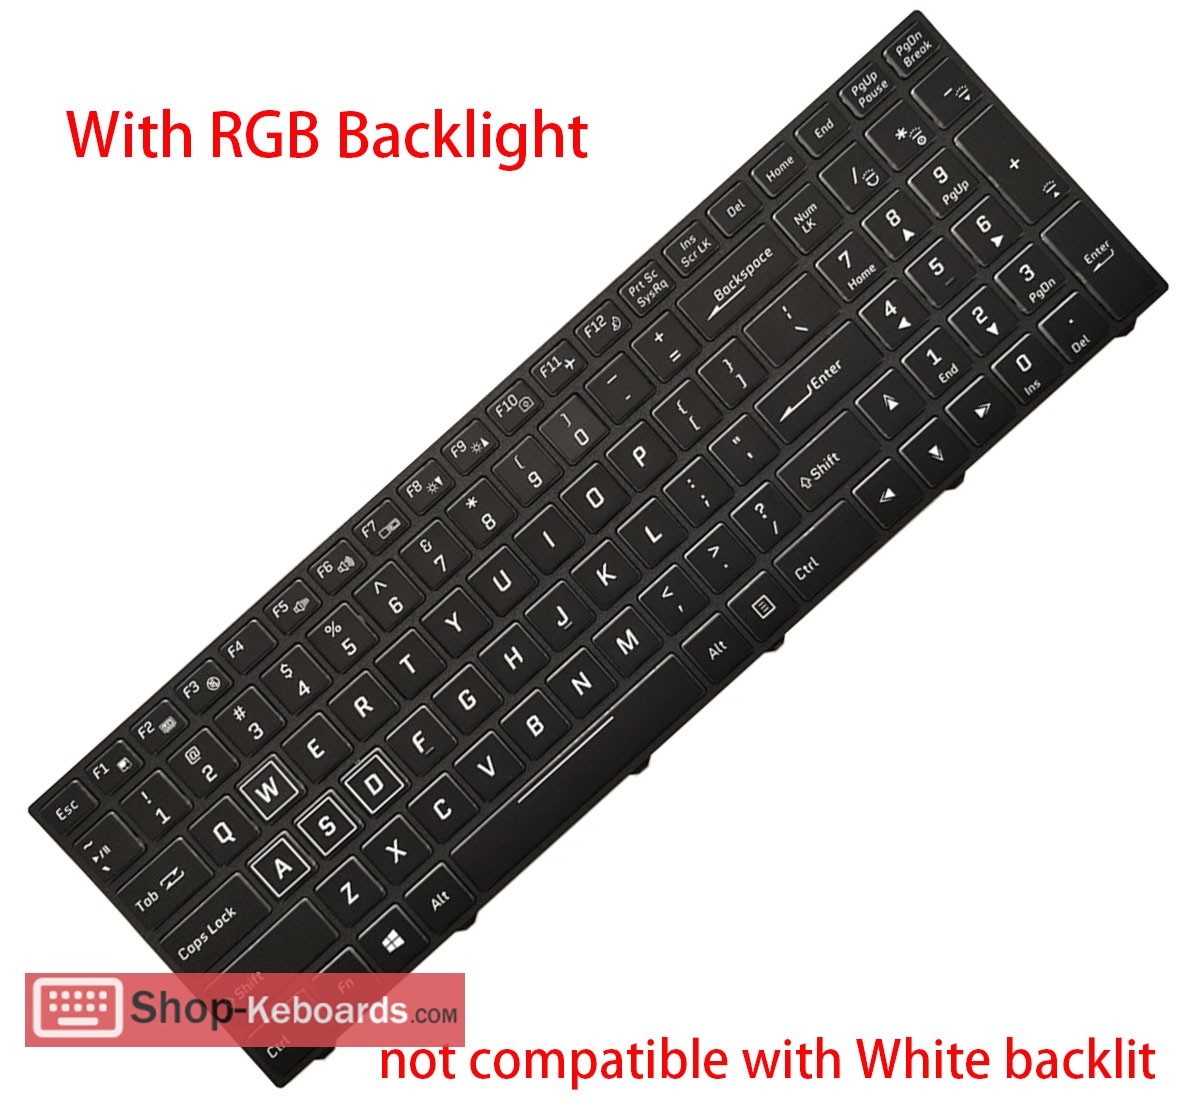 NEXOC G1730 Keyboard replacement